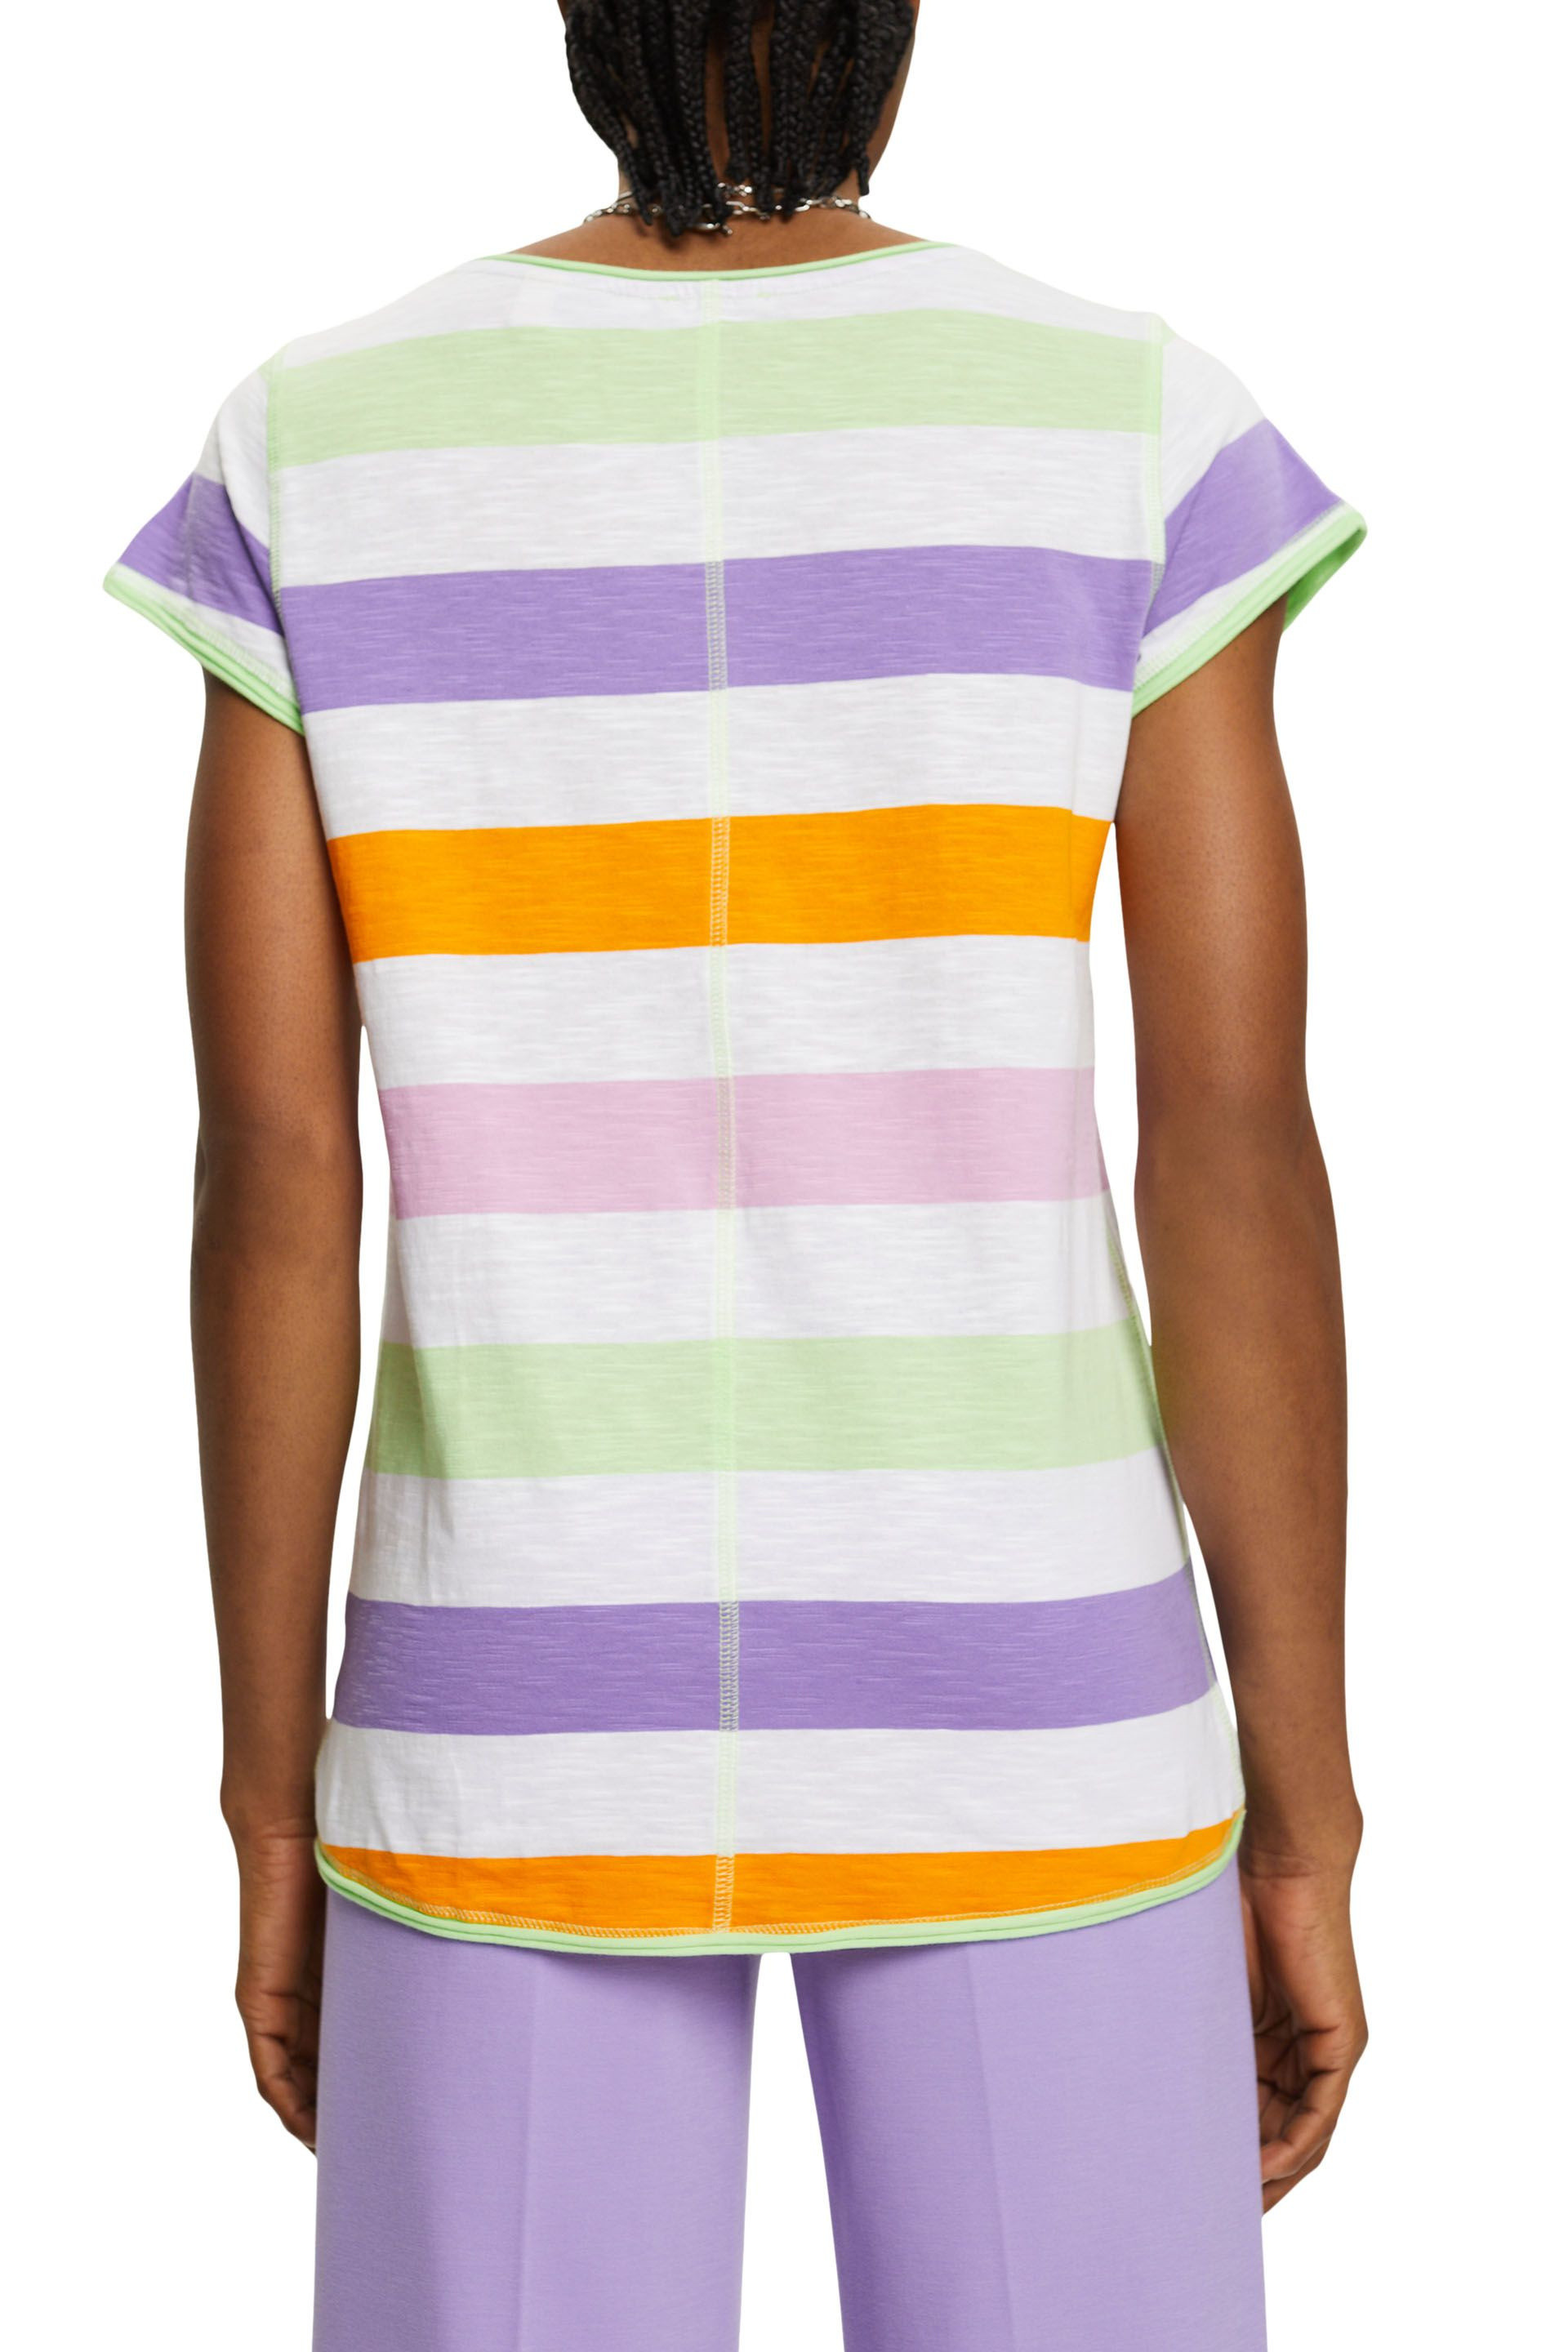 Esprit - Striped T-Shirt, Multicolor, large image number 3